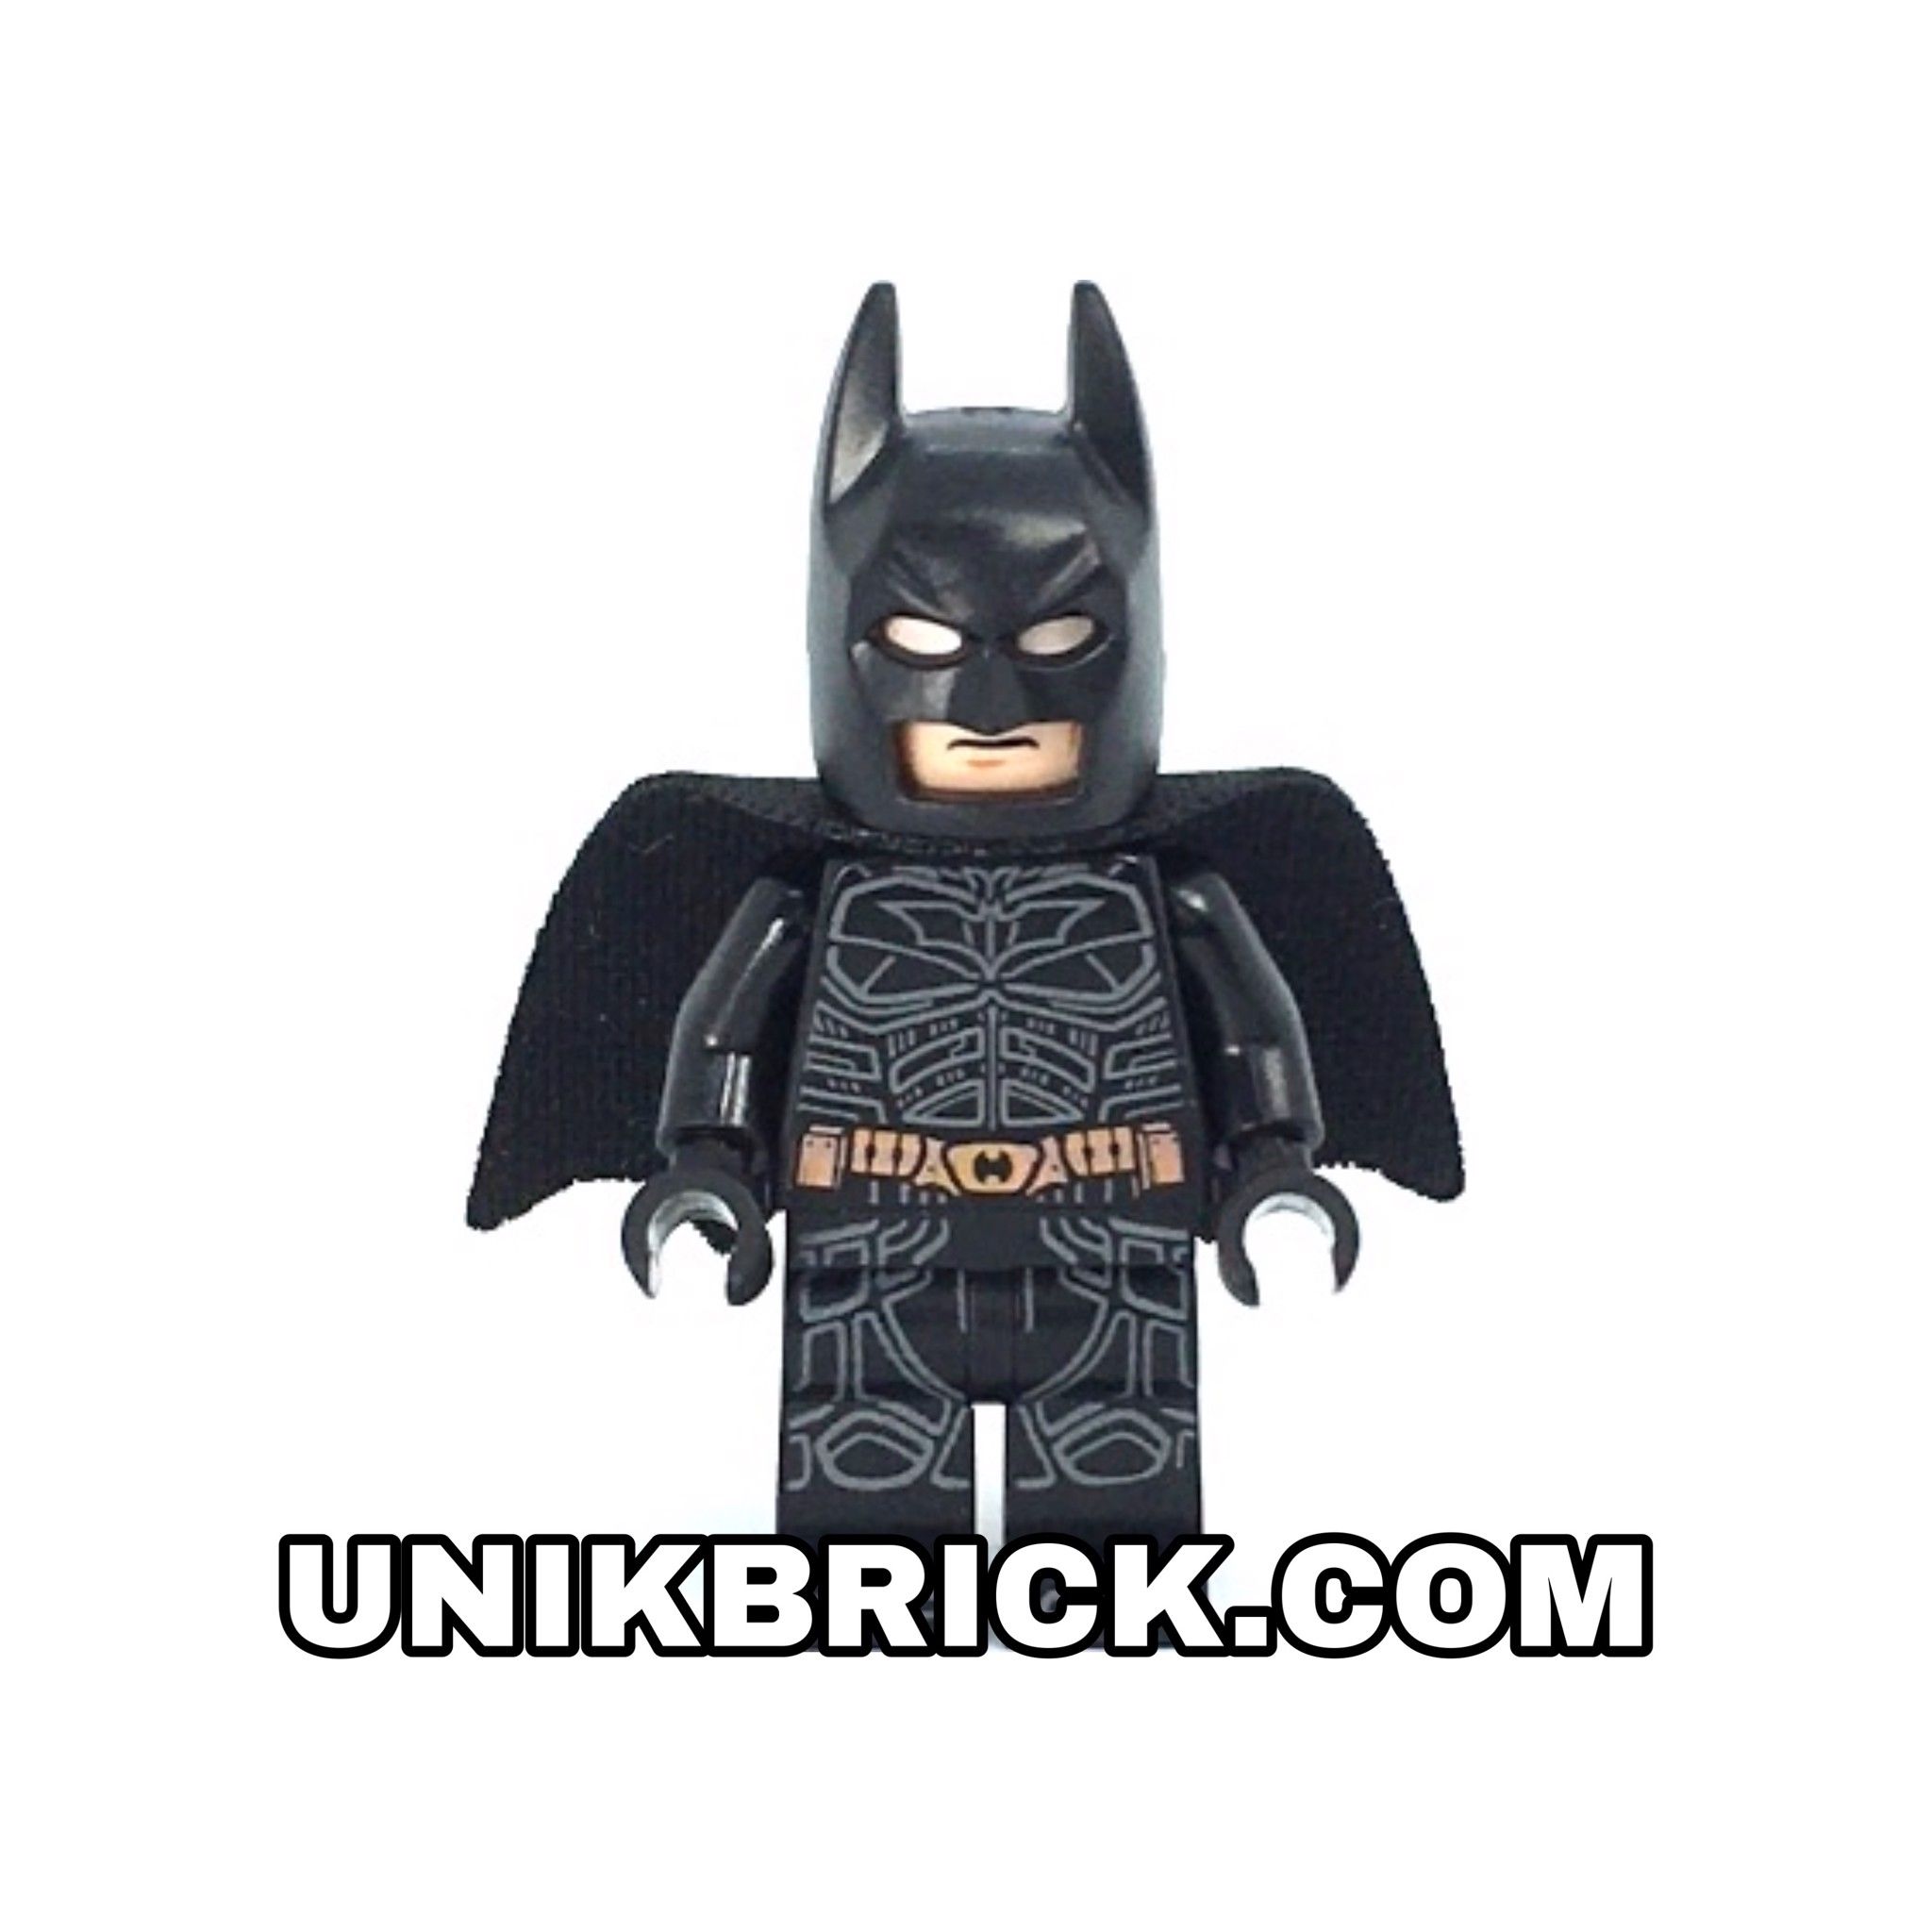 ORDER ITEMS] LEGO Batman Black Suit with Copper Belt and Printed Legs –  UNIK BRICK